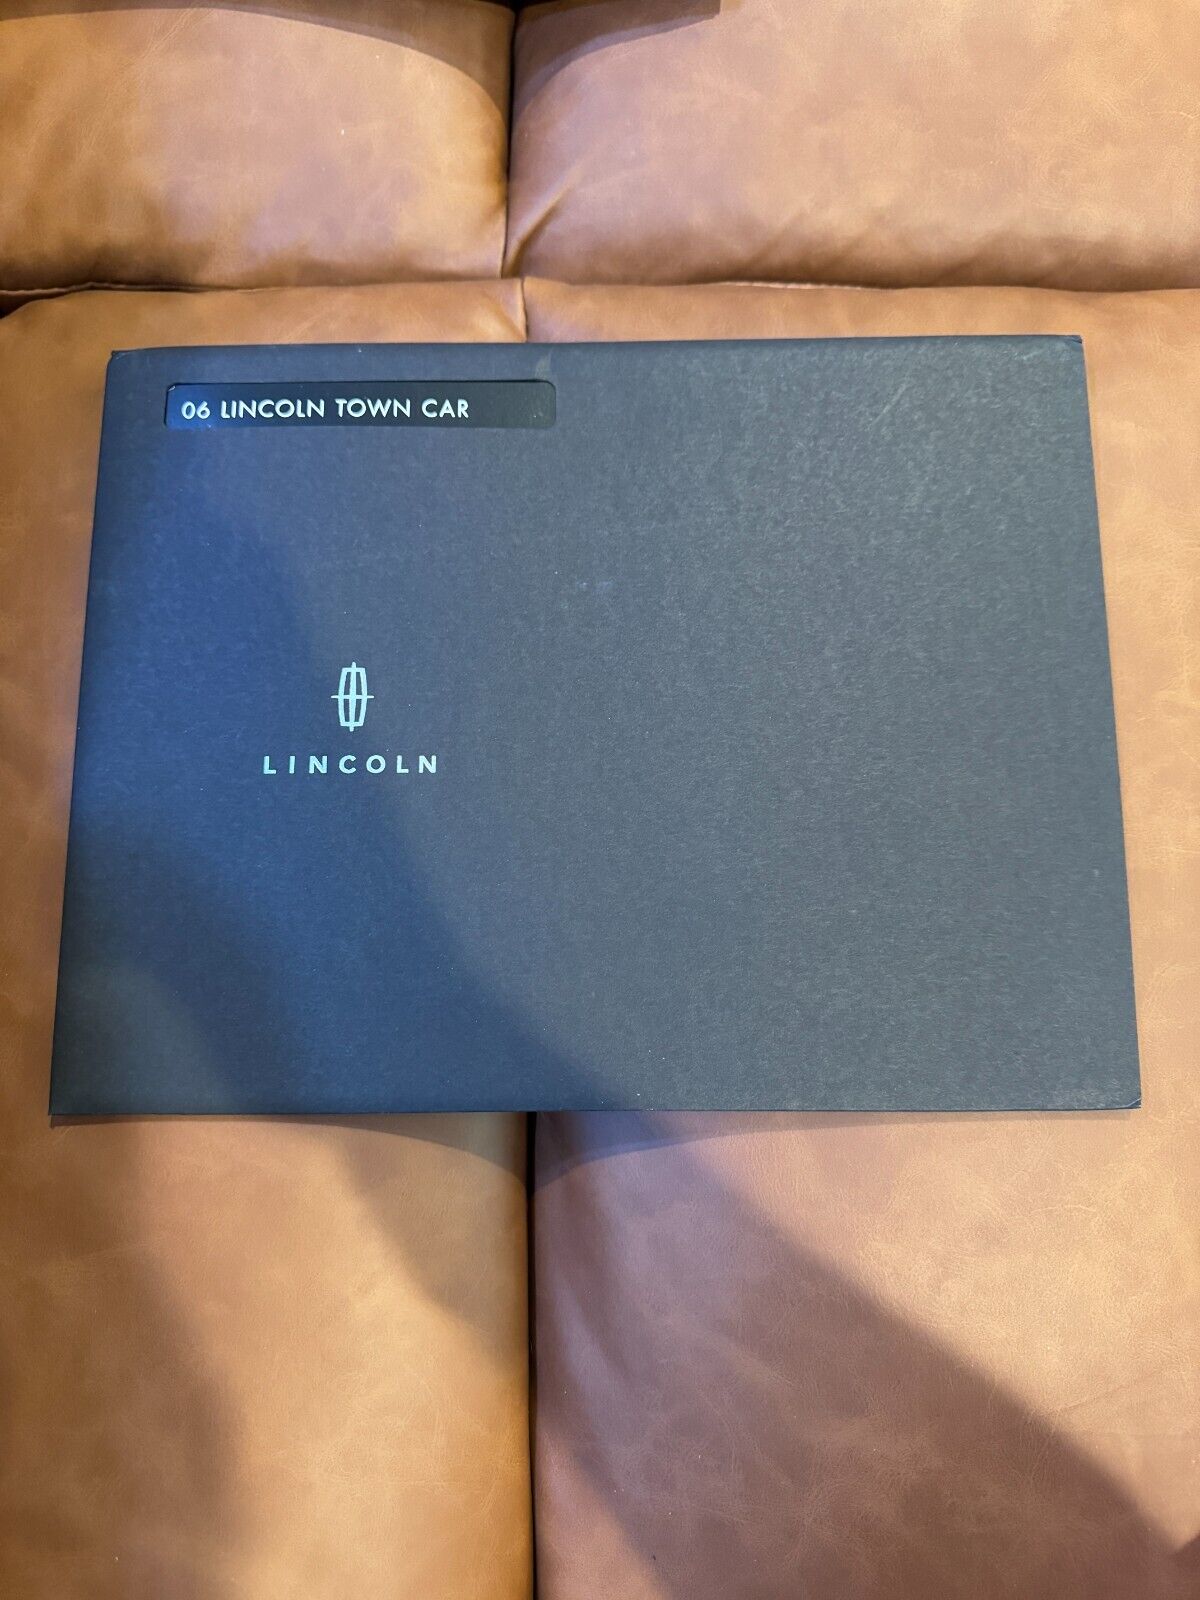 2006 Lincoln Town Car sales brochure sealed in envelope